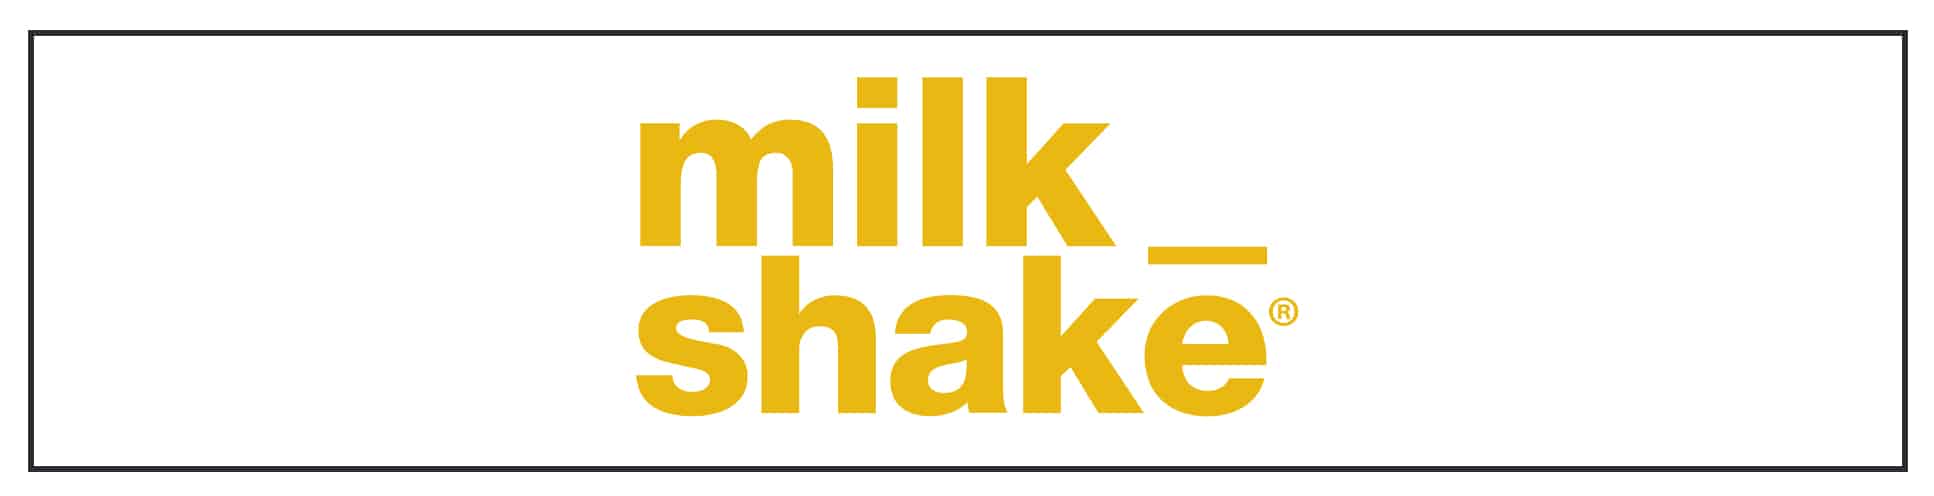 The milk shake logo on a white background.